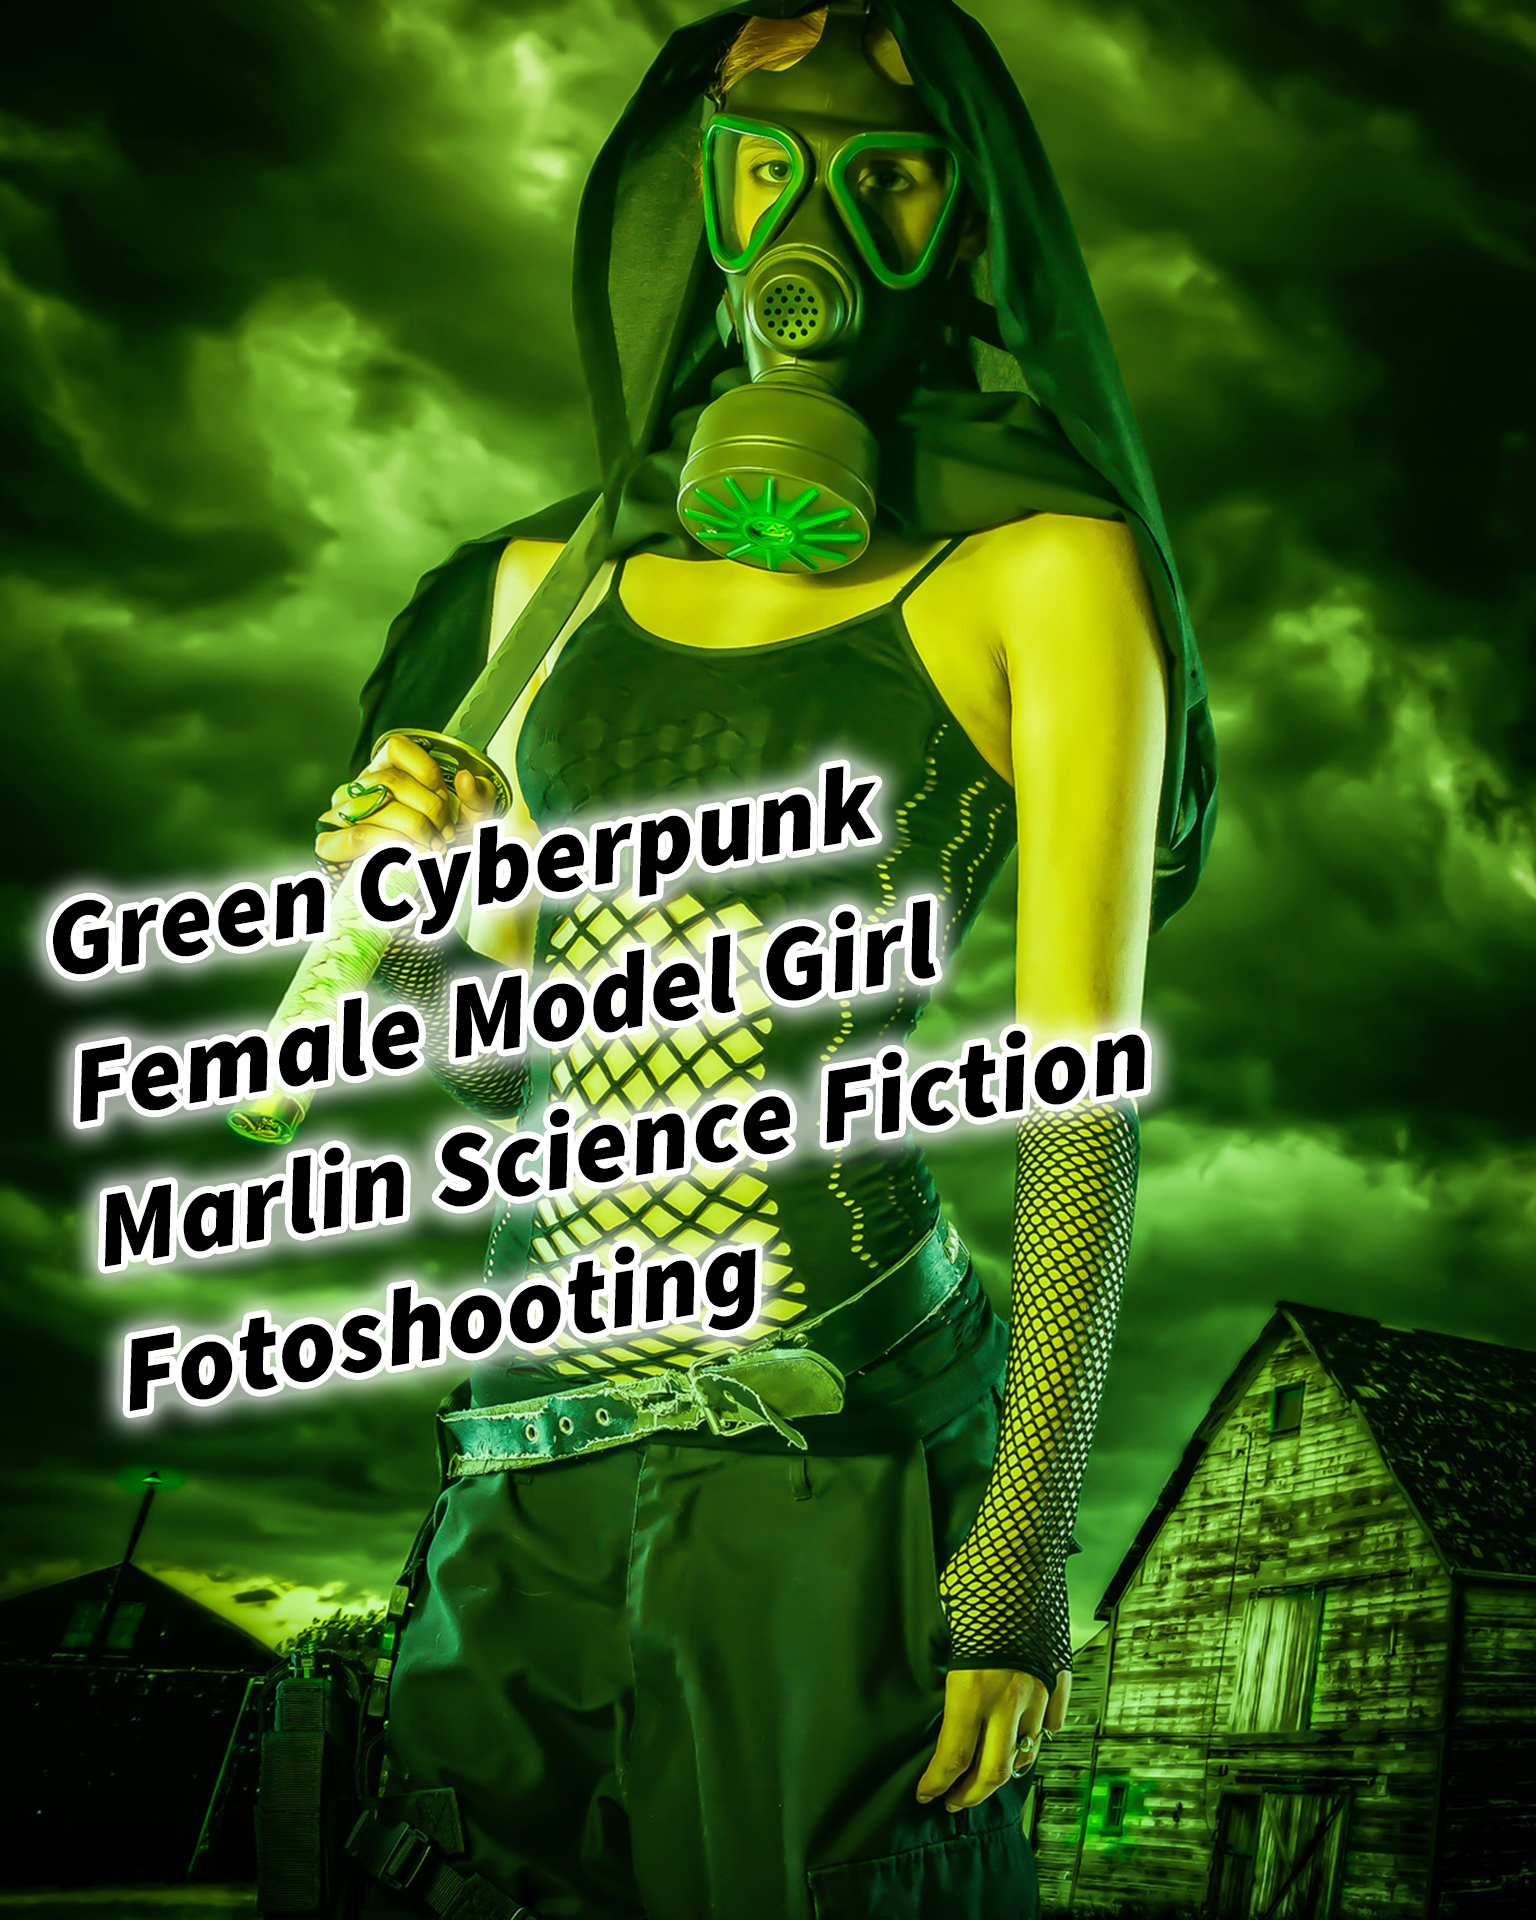 Green Cyberpunk Female Model Girl Marlin Science Fiction Fotoshooting Photoshop Bildbearbeitung